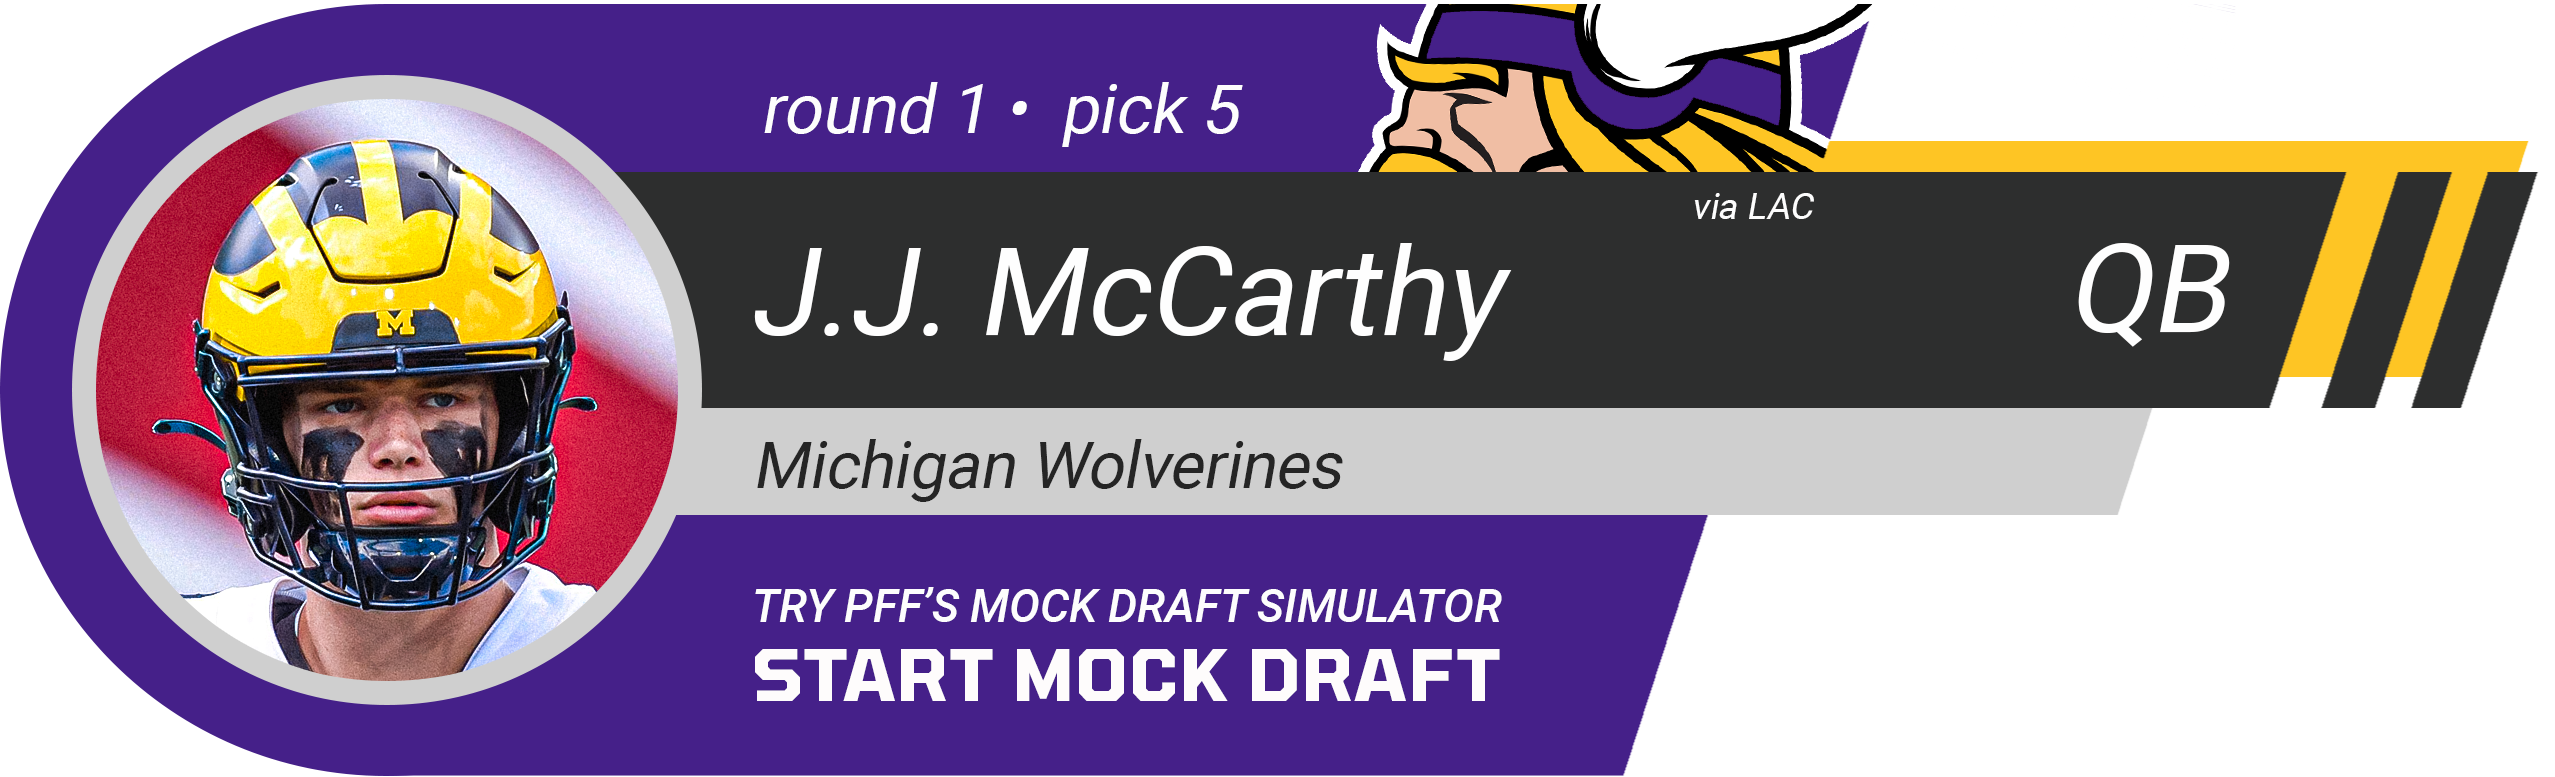 5. Minnesota Vikings: QB J.J. McCarthy, Michigan